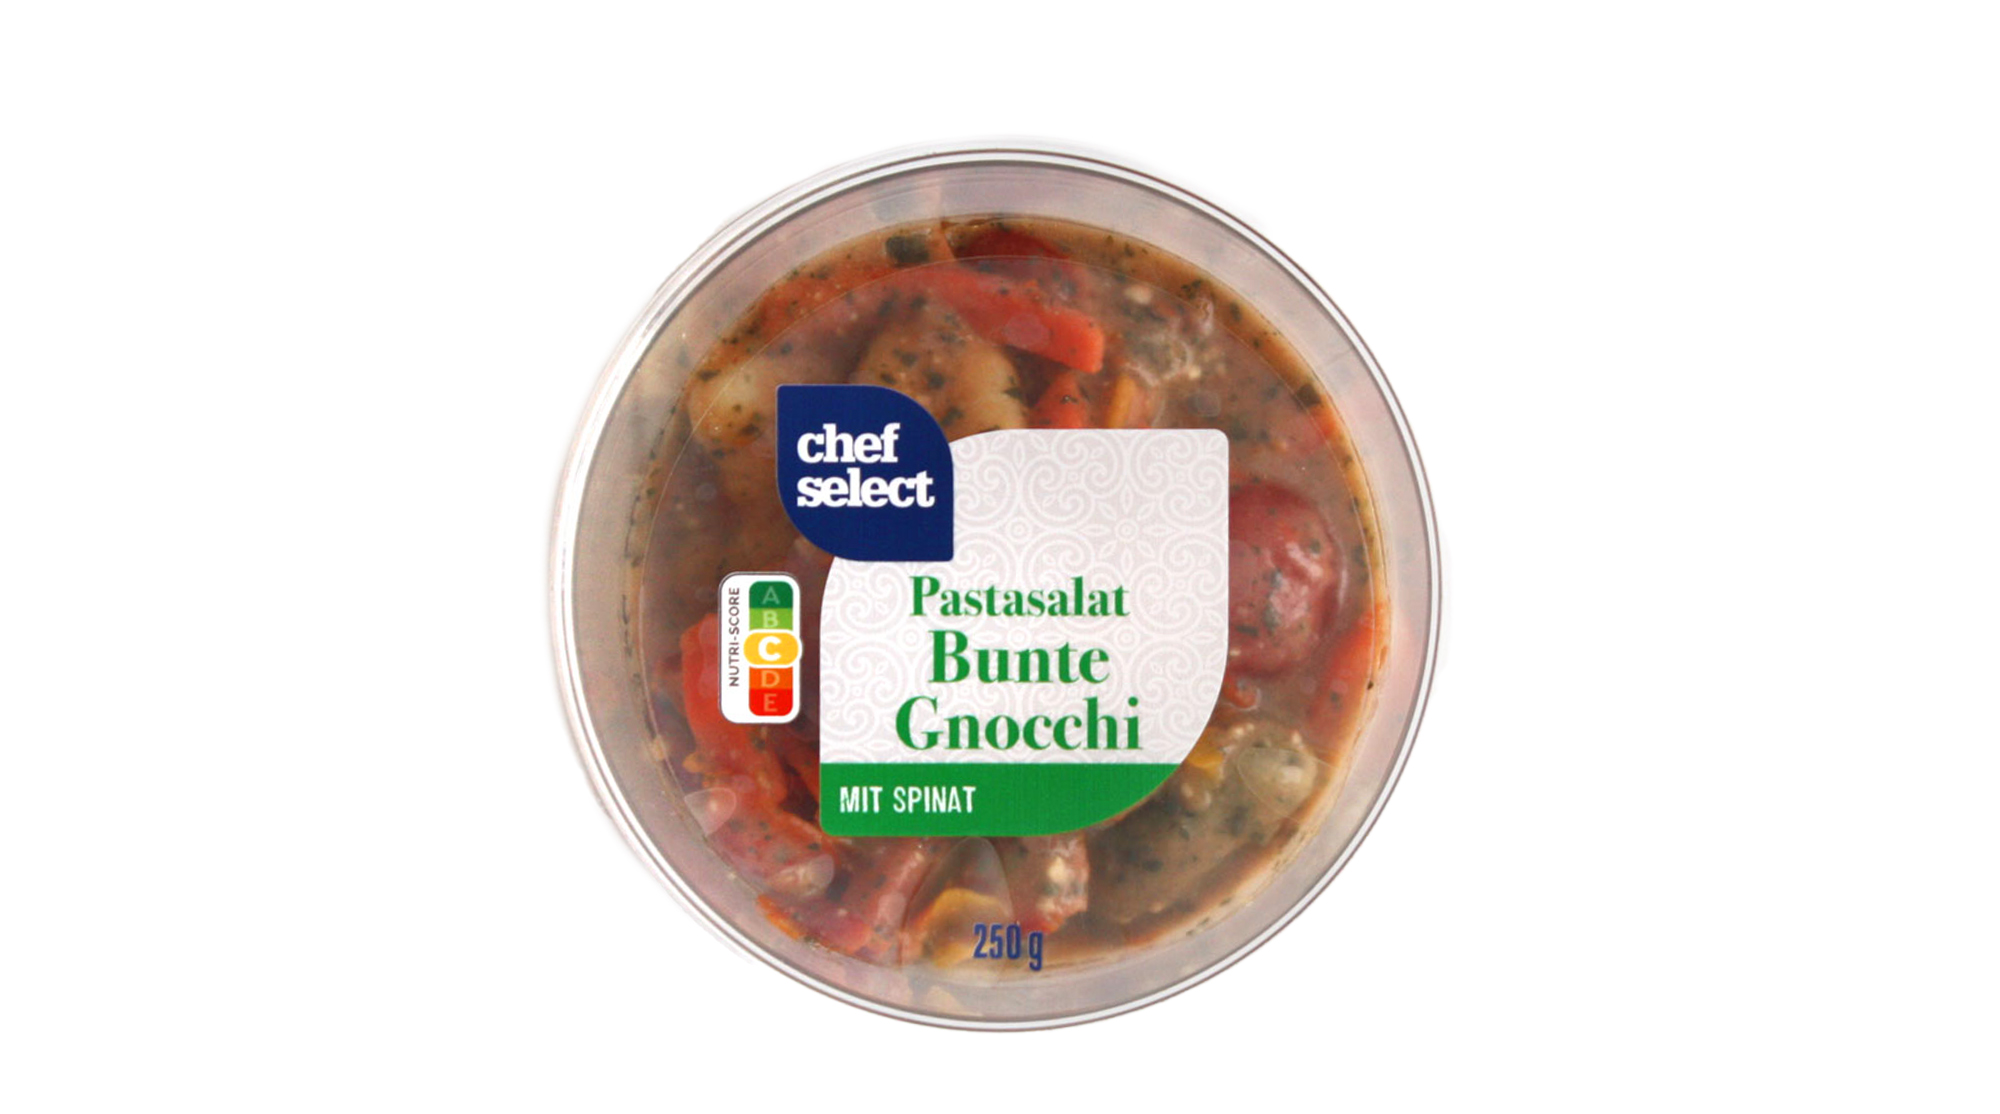 Chef Select Pasta Salat Bunte Gnocchi mit Spinat | Lebensmittelklarheit